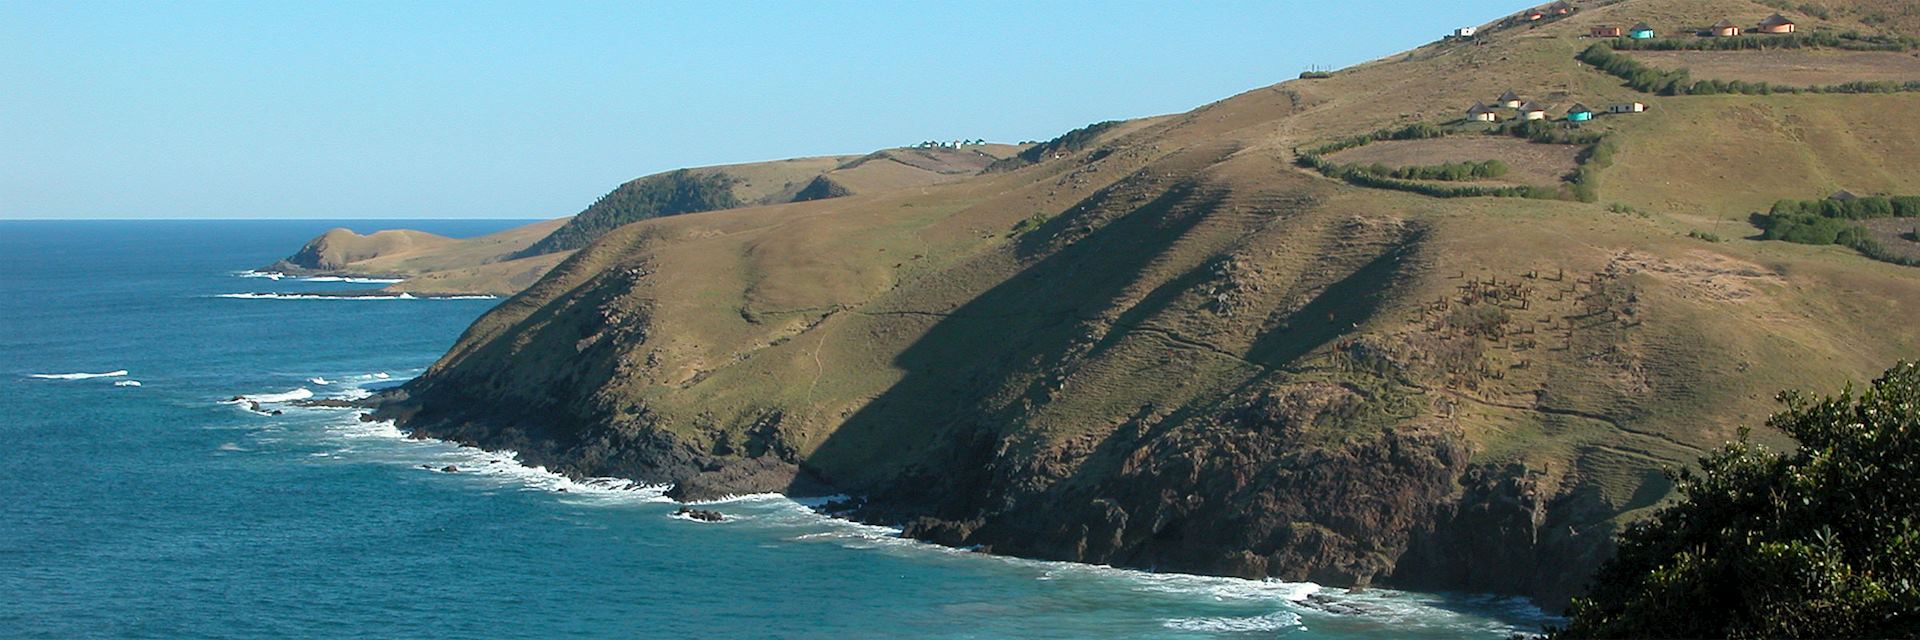 Wild Coast Coastline at Coffee Bay